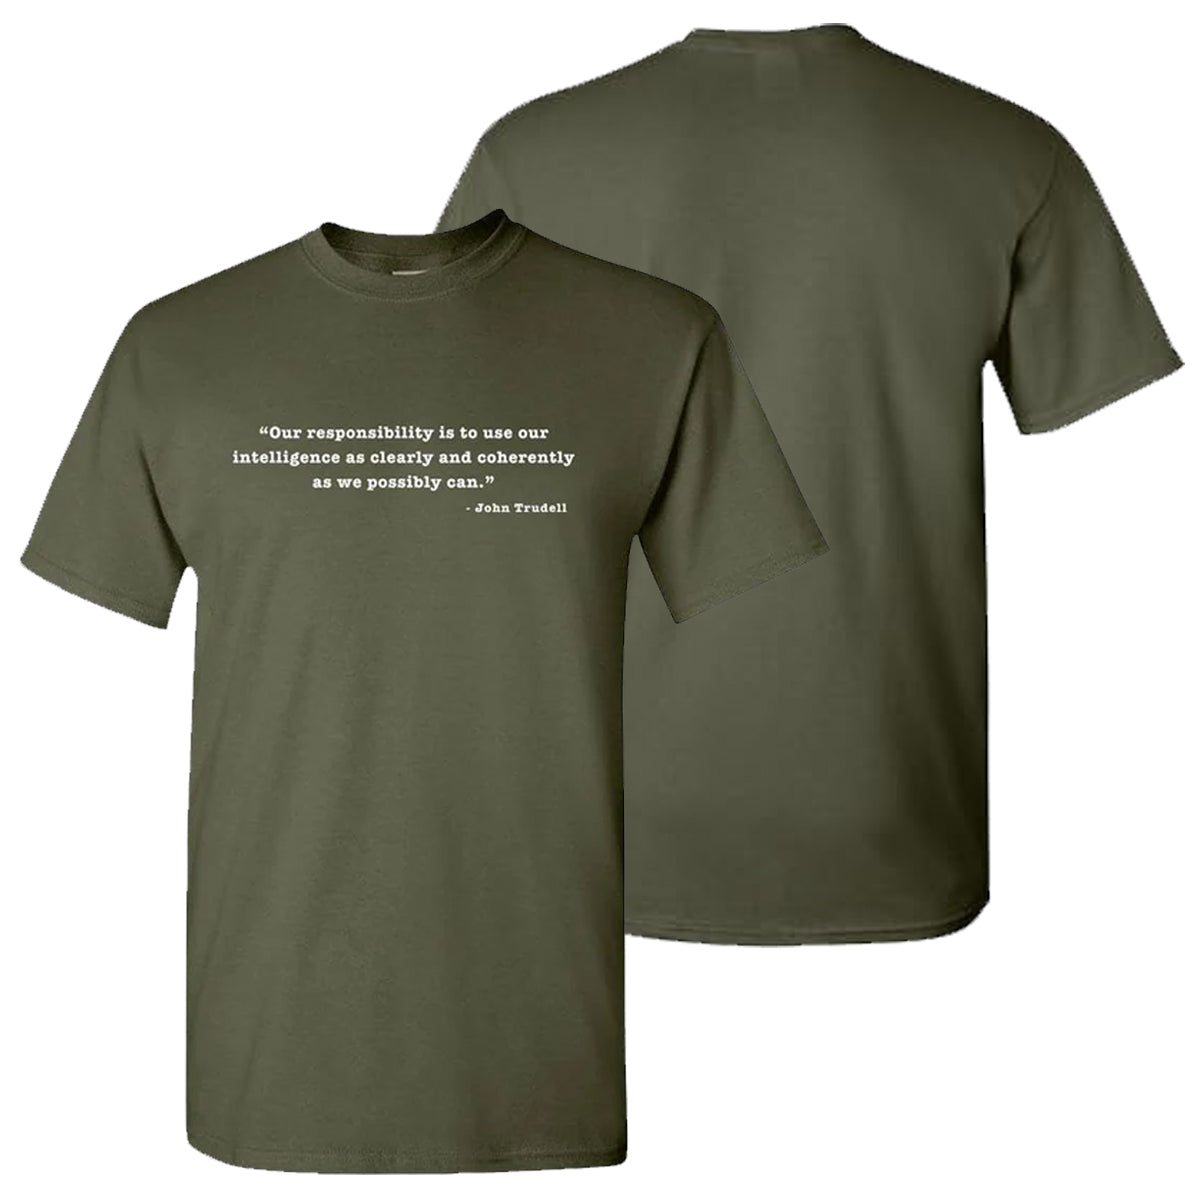 JOHN TRUDELL Responsibility T-Shirt